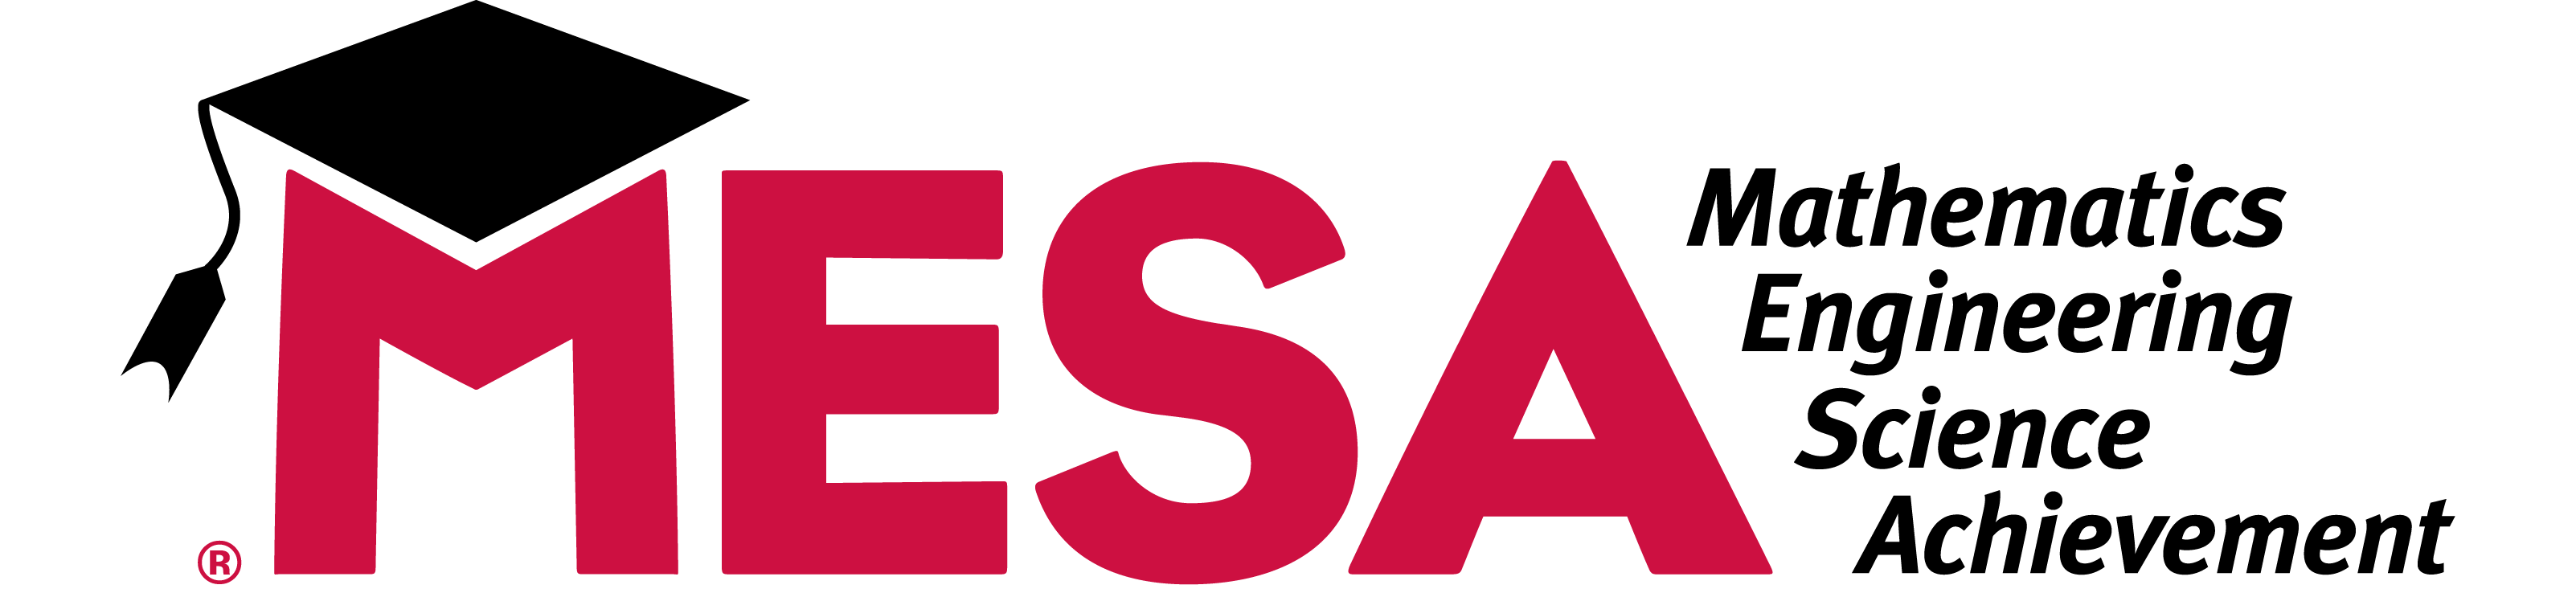 MESA Grant logo